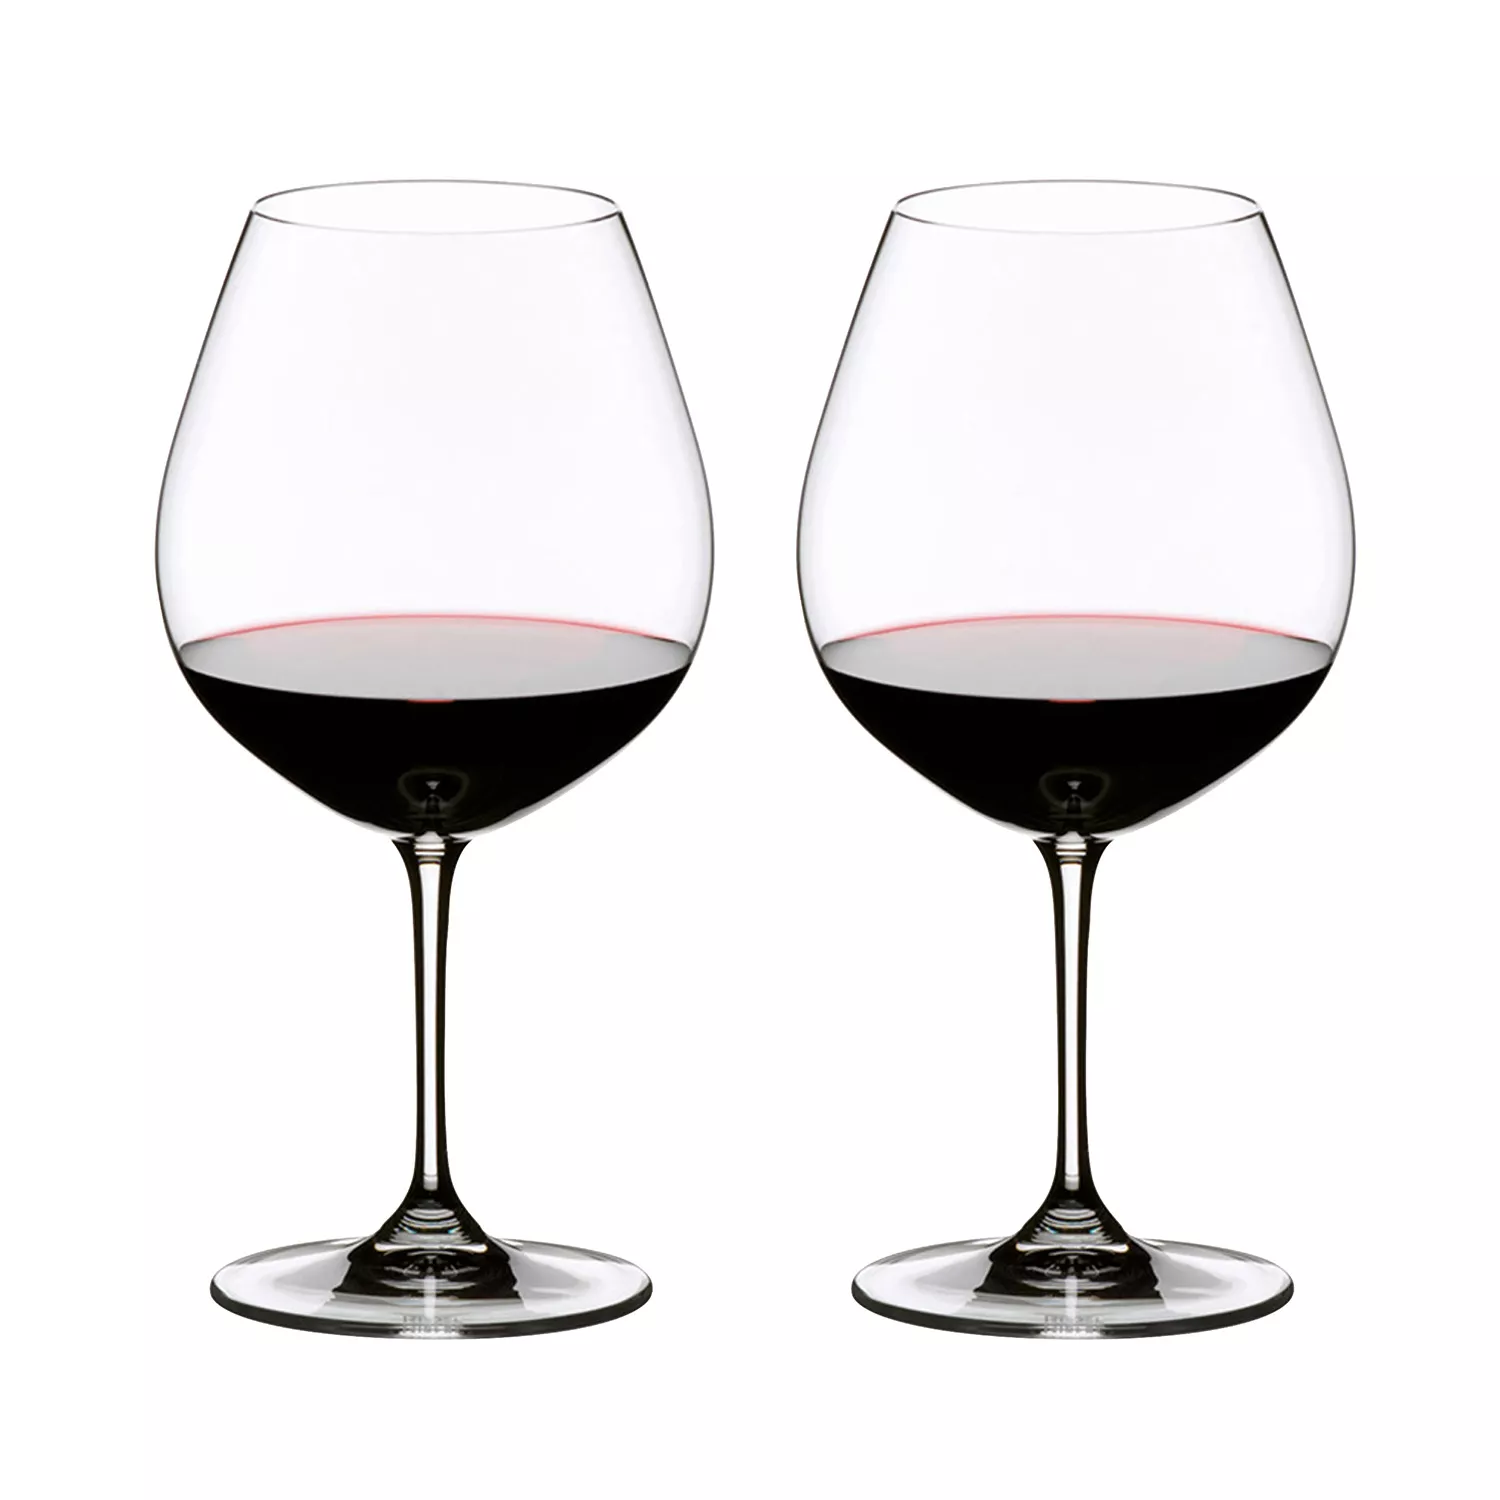 RIEDEL Vinum Pinot Noir (Burgundy Red) Wine Glass, Set of 2